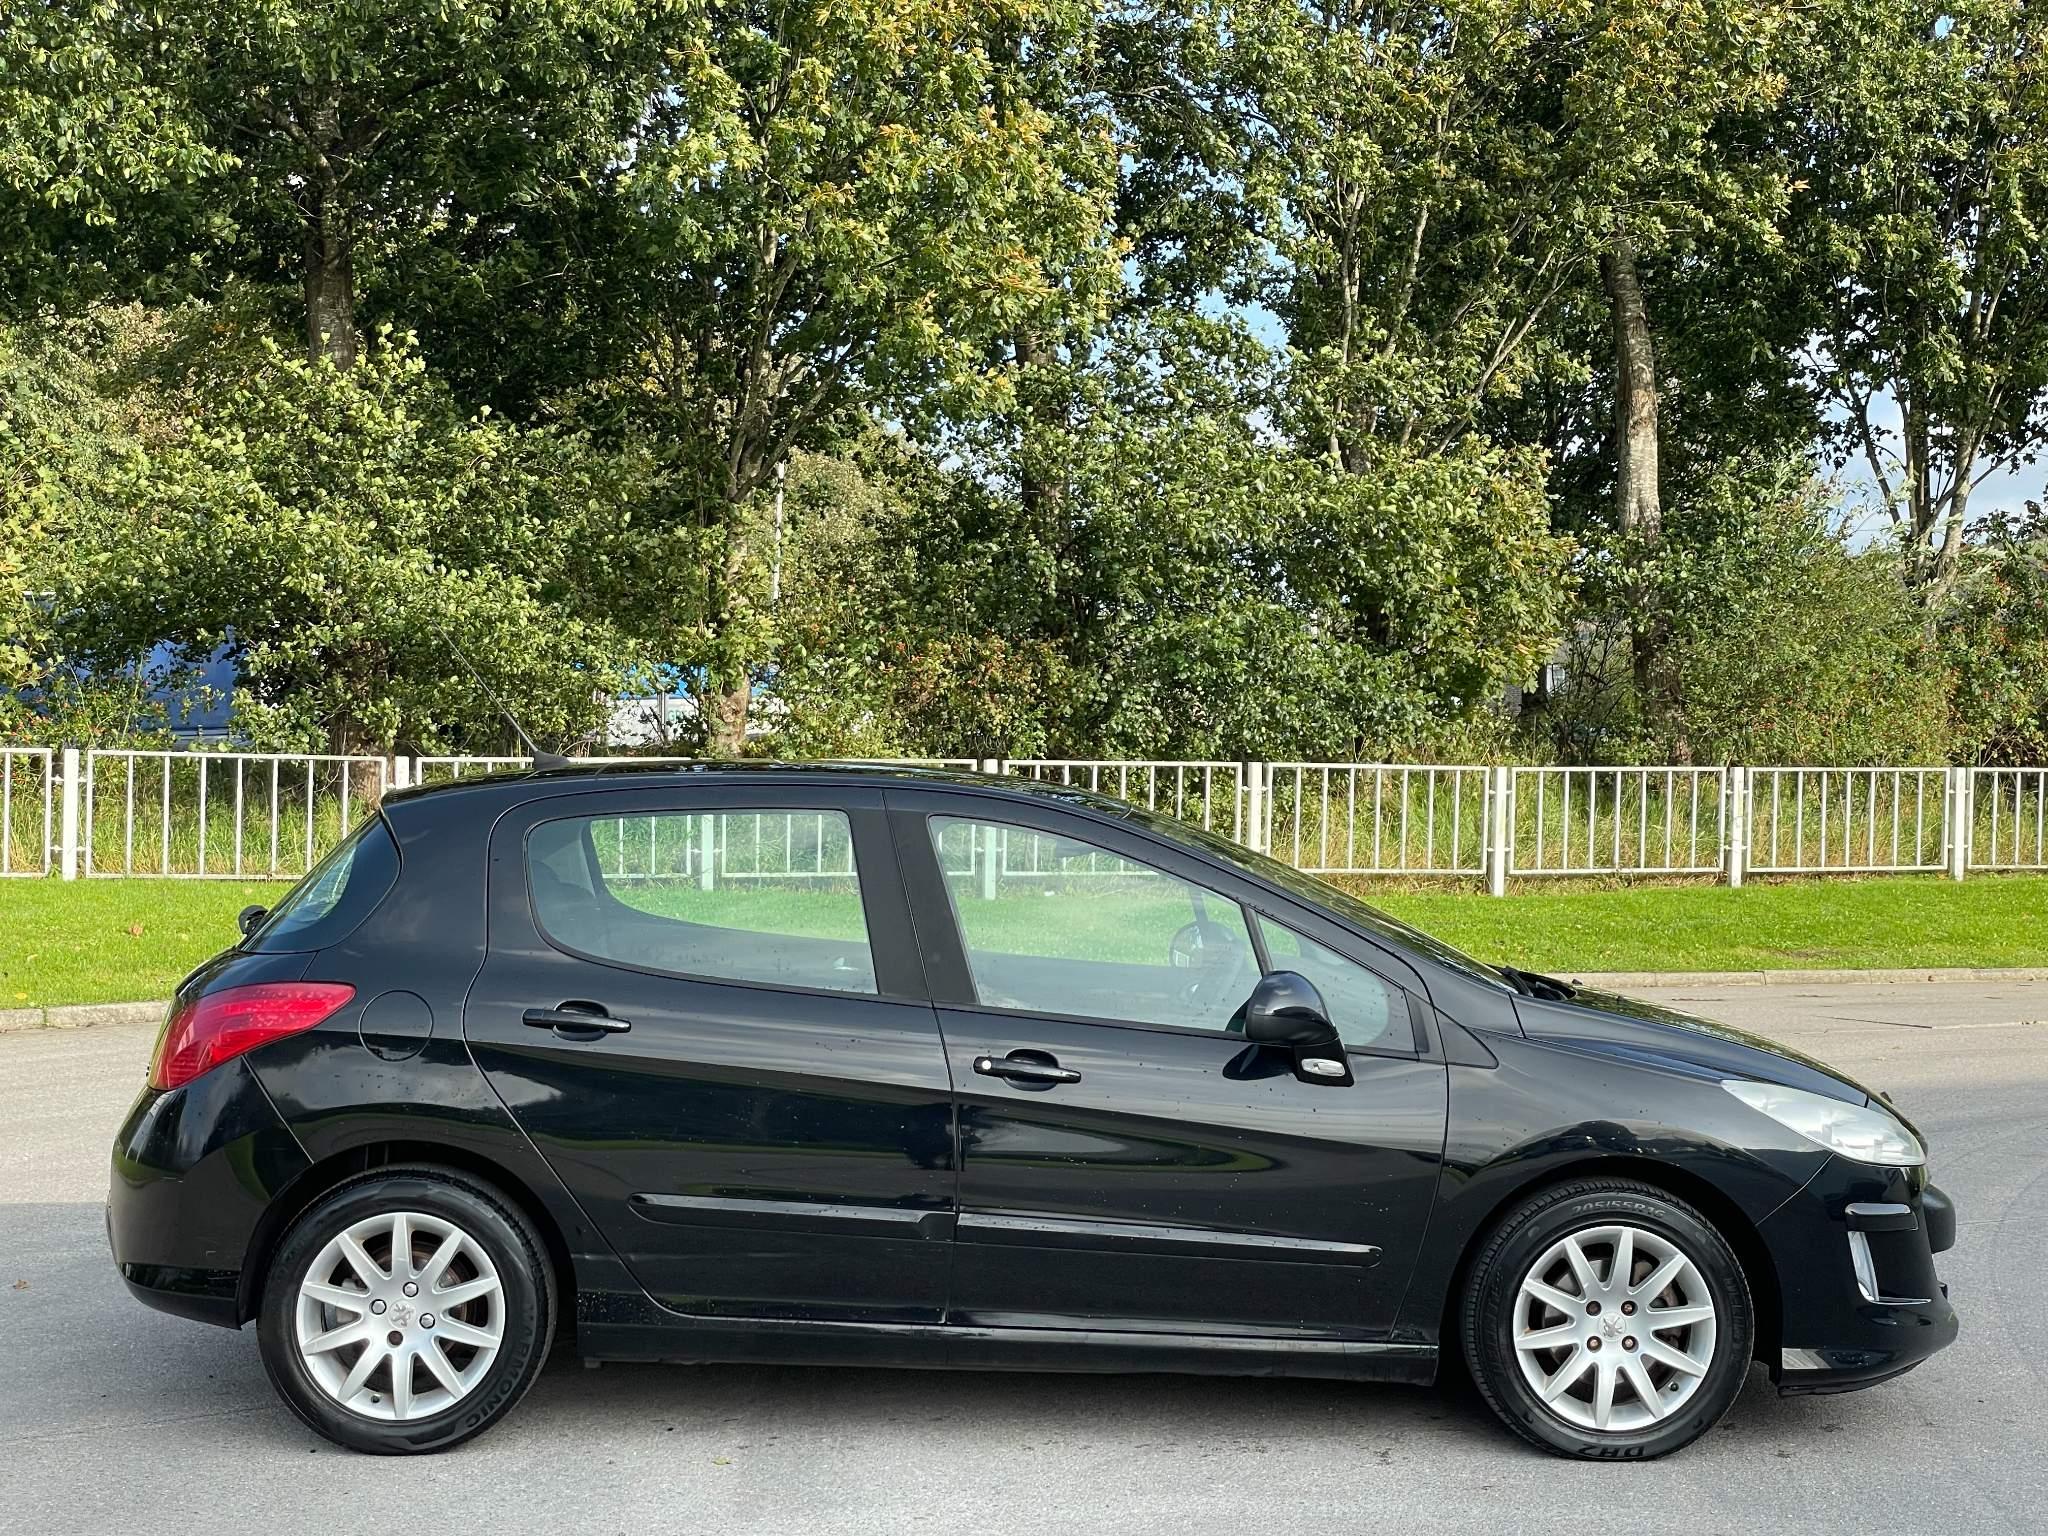 Peugeot 308 (2007-2013) Review